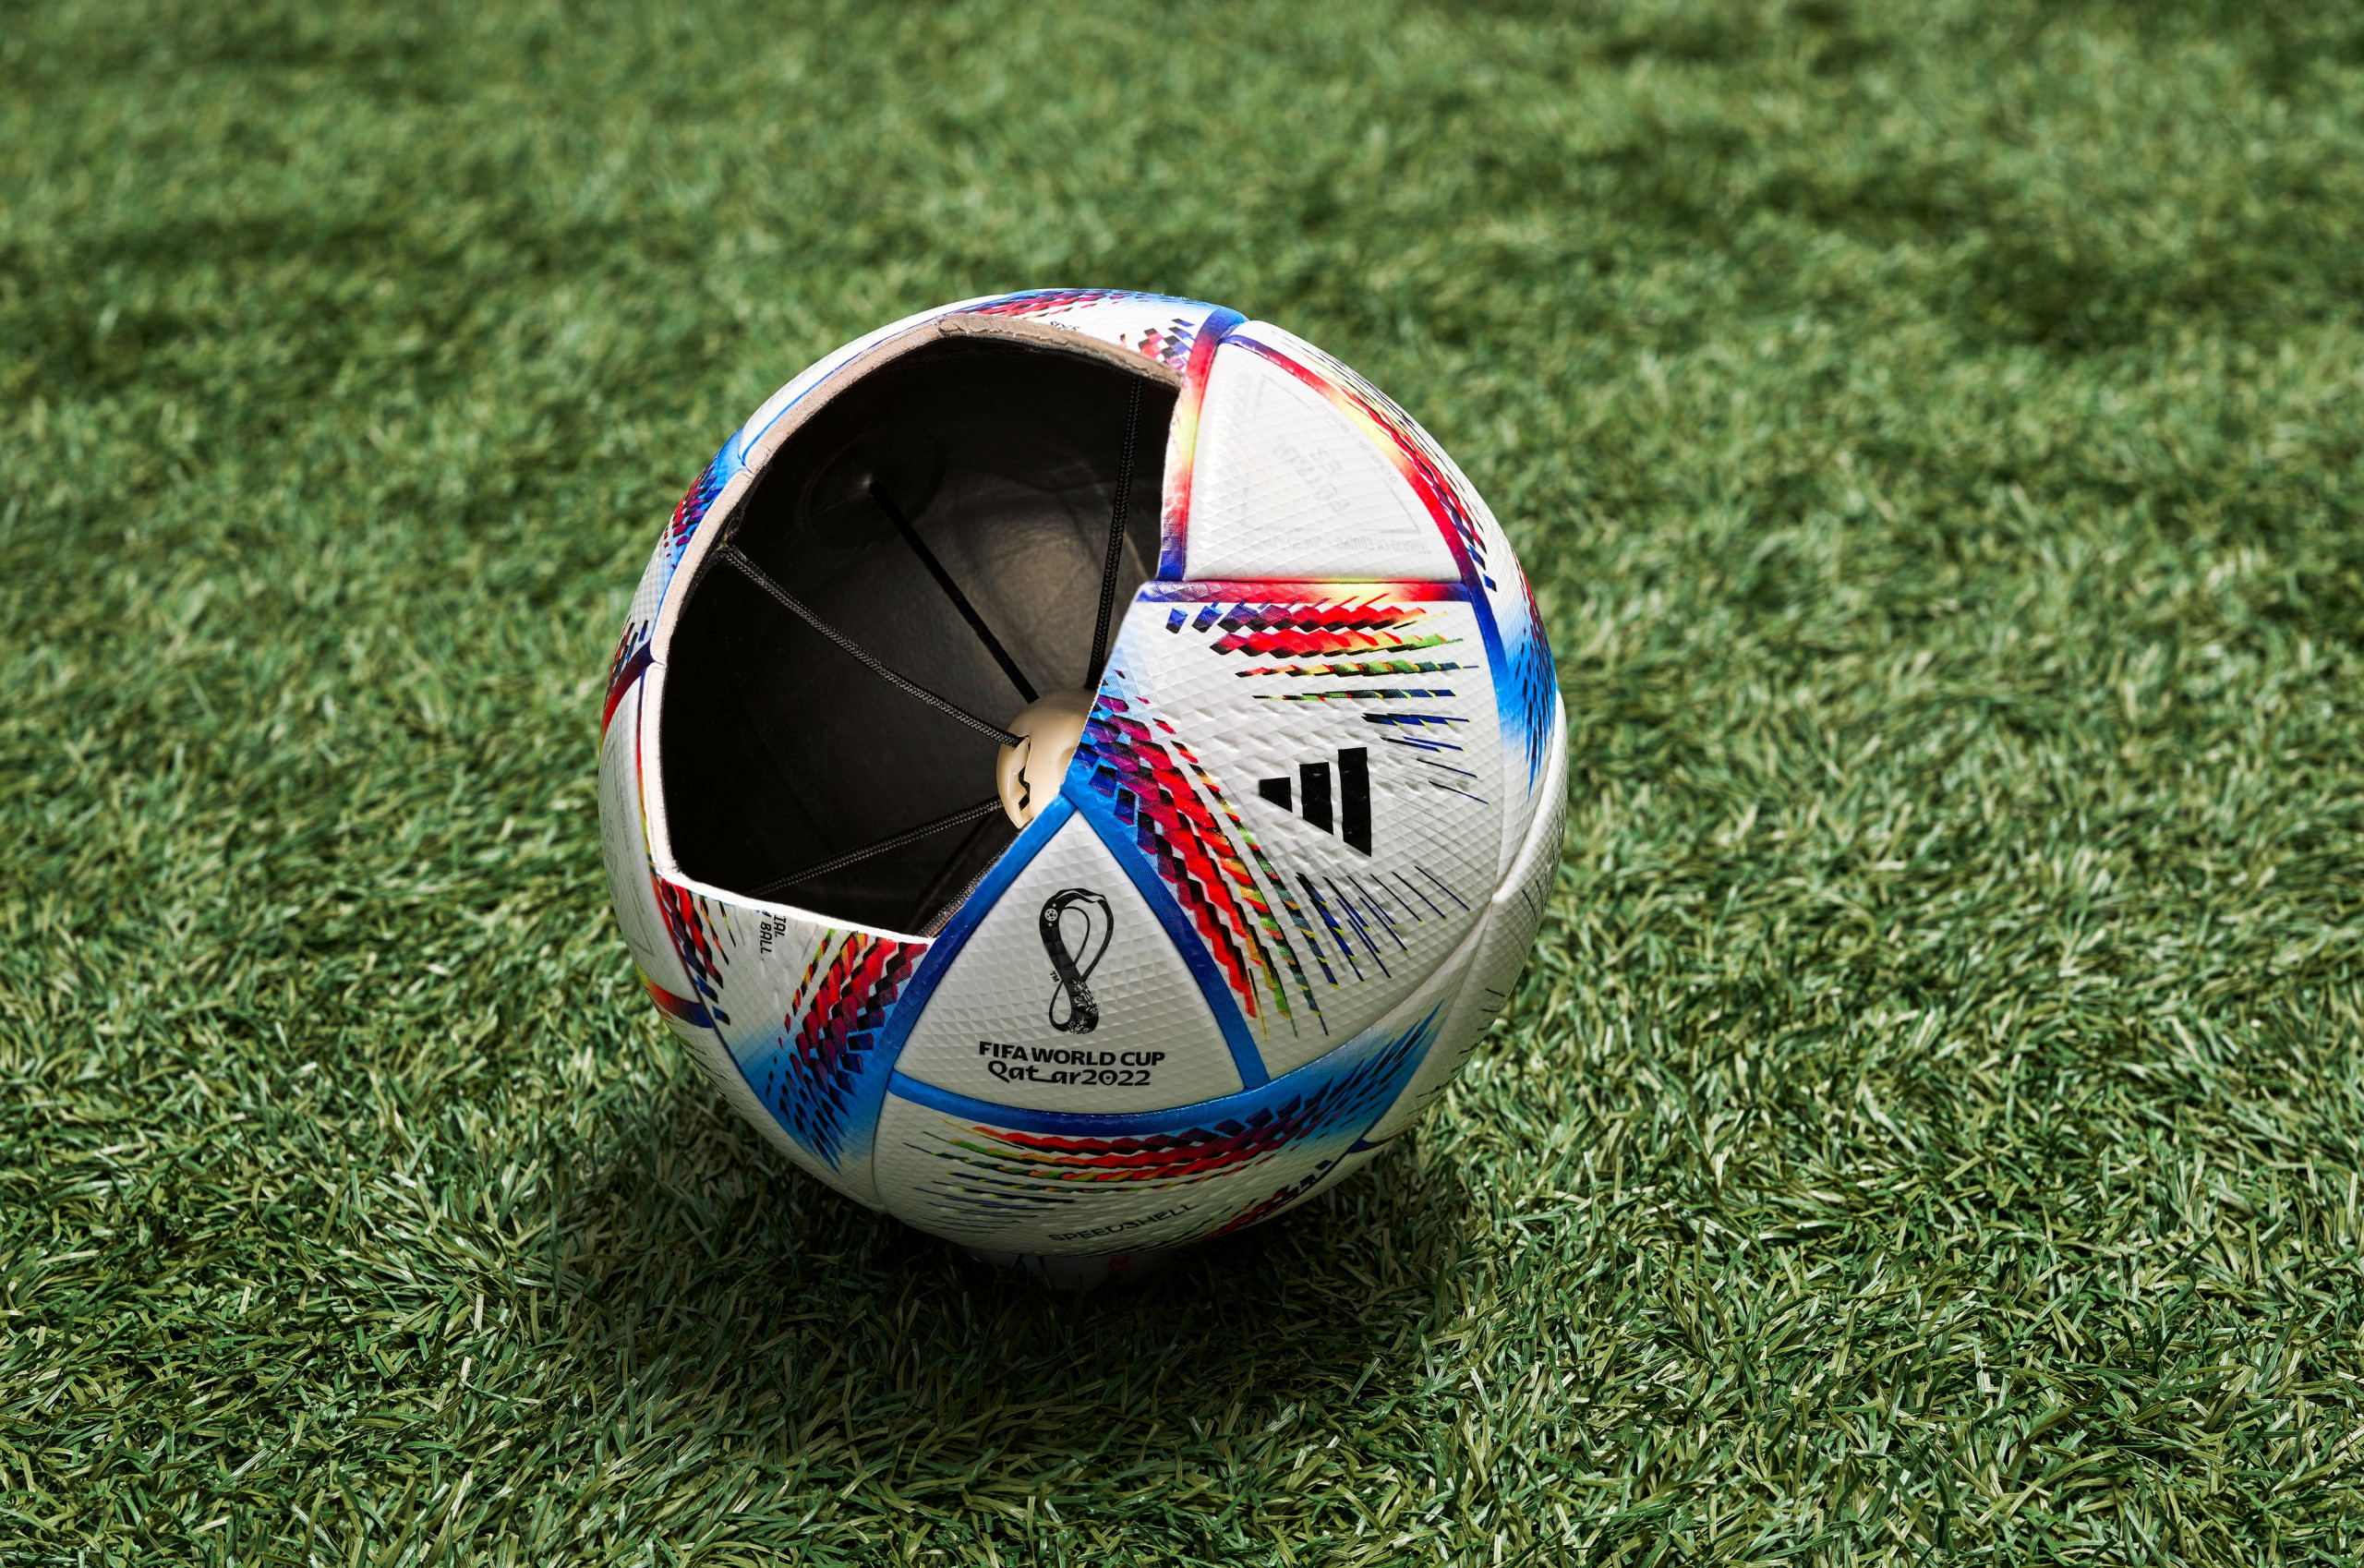 High Tech Ball World Cup Qatar 2022